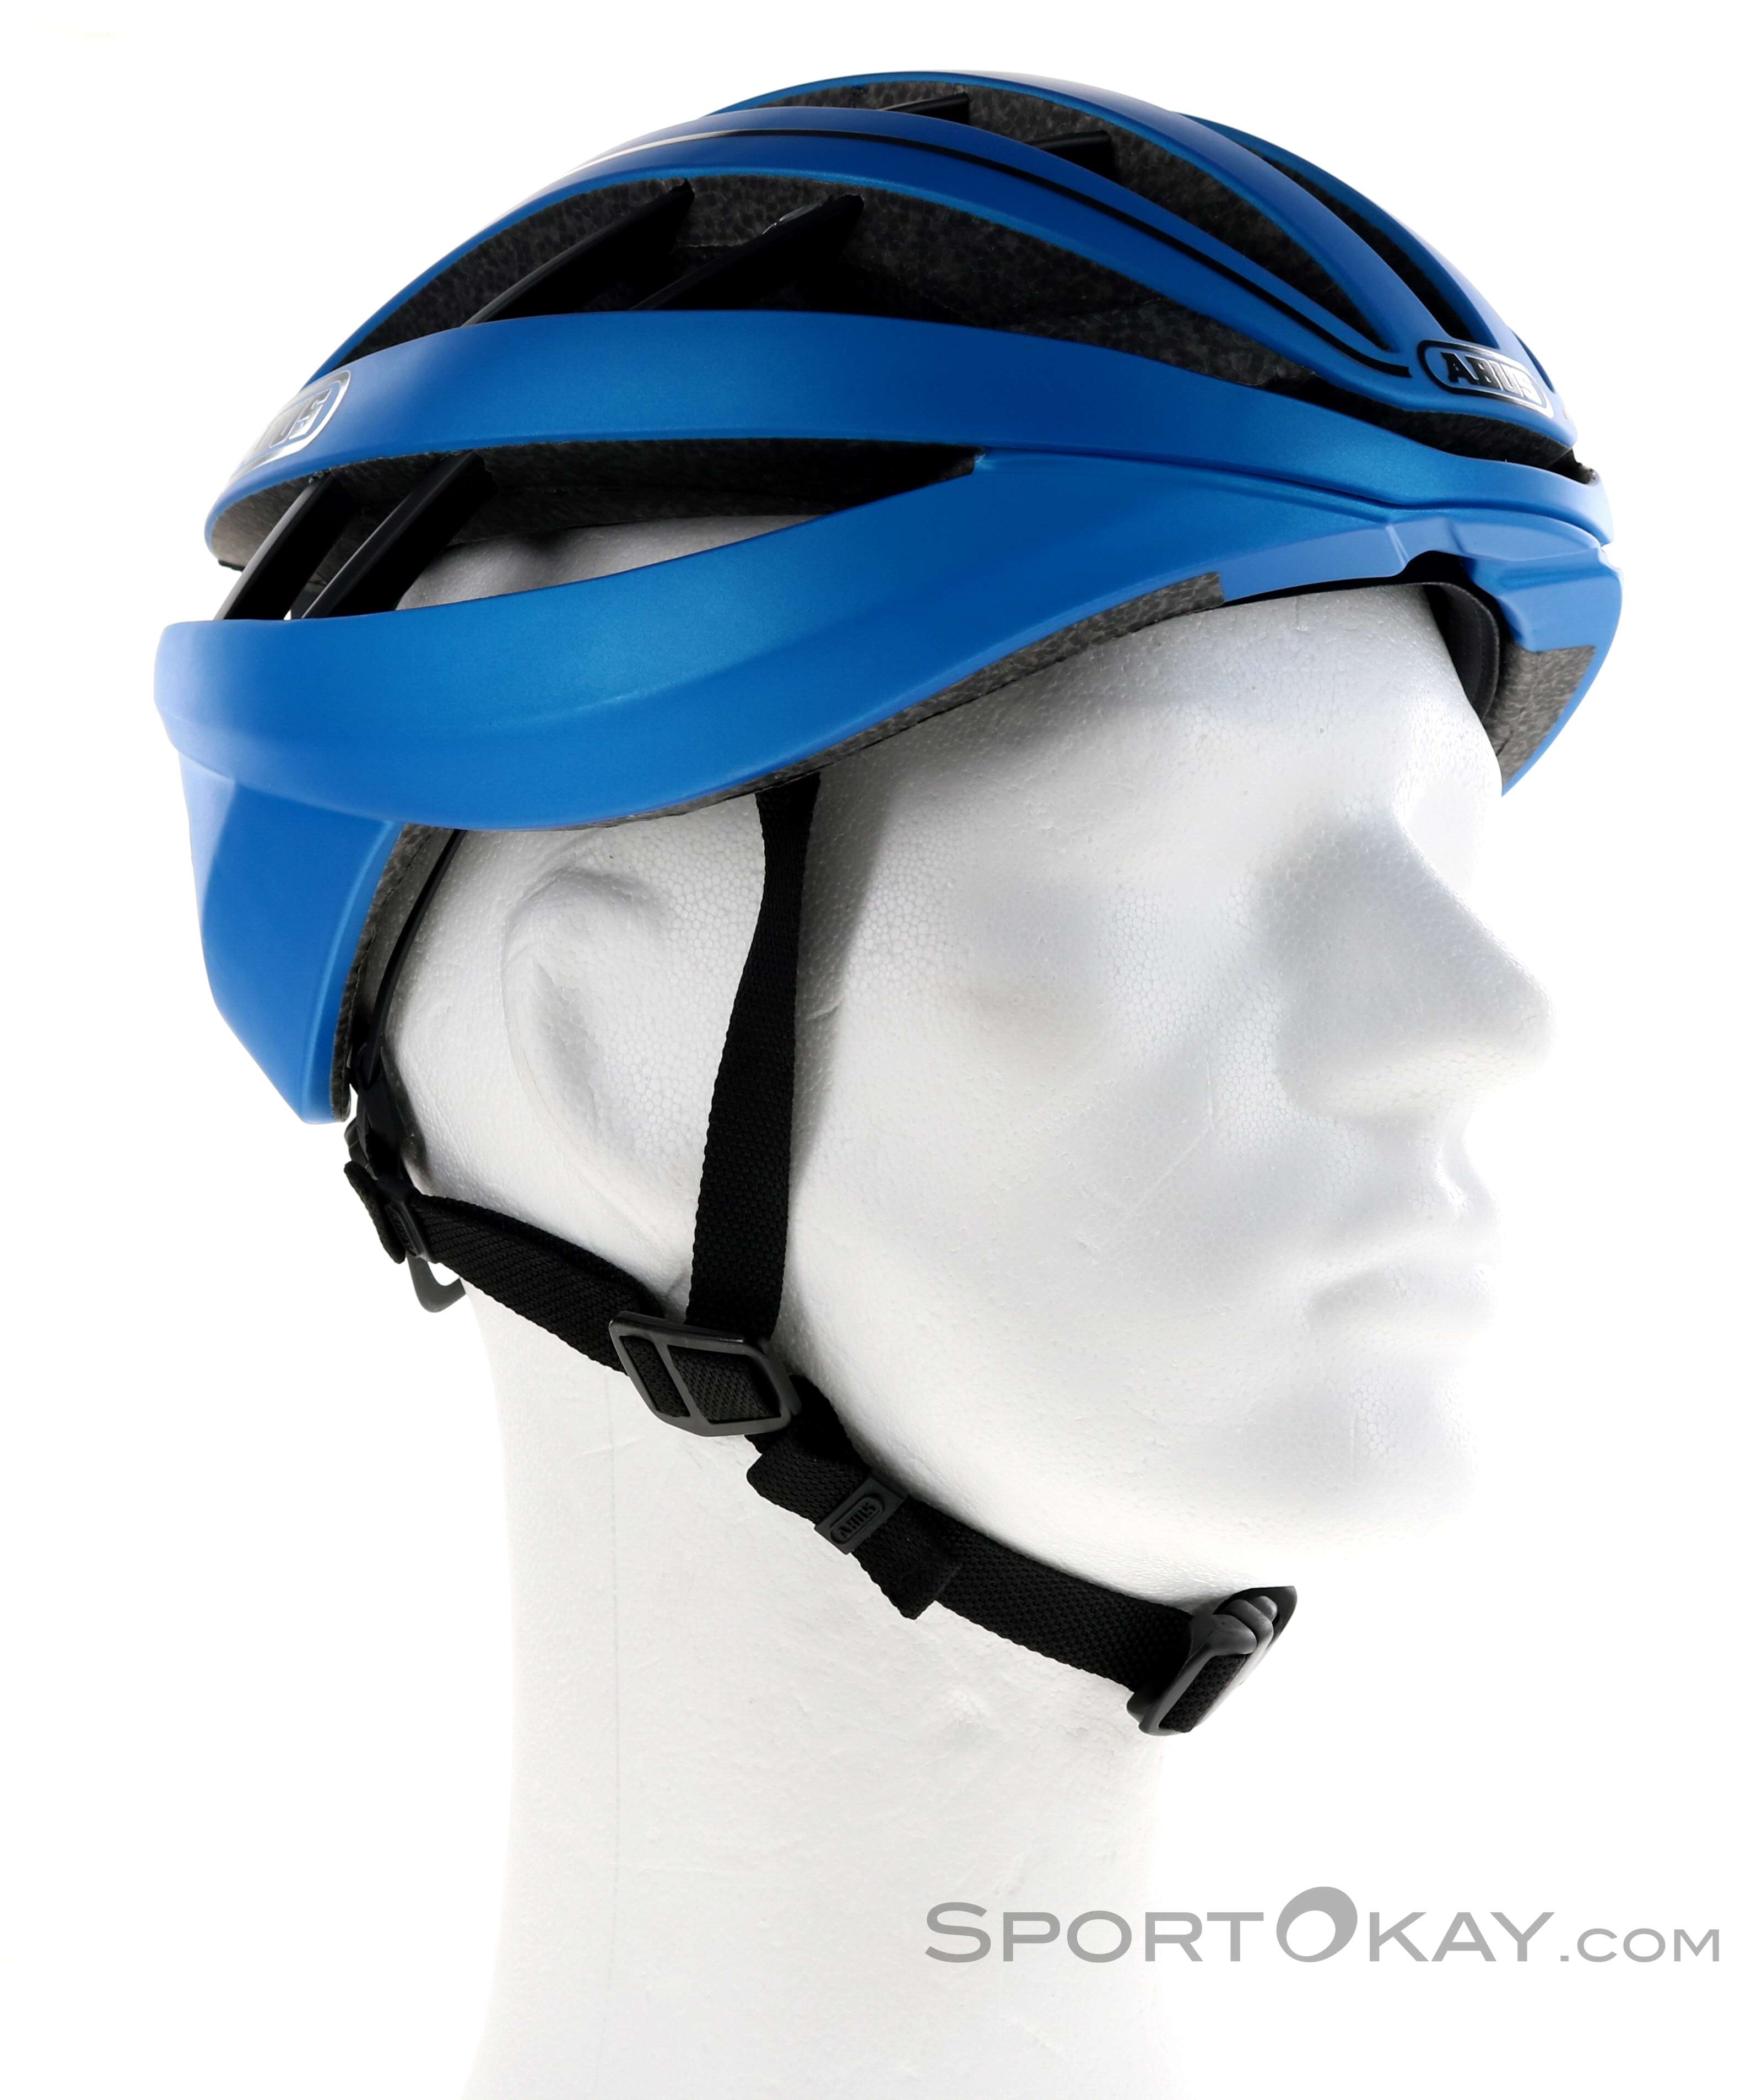 Abus Aventor Road Cycling Helmet - Road Bike - Helmets - Bike All